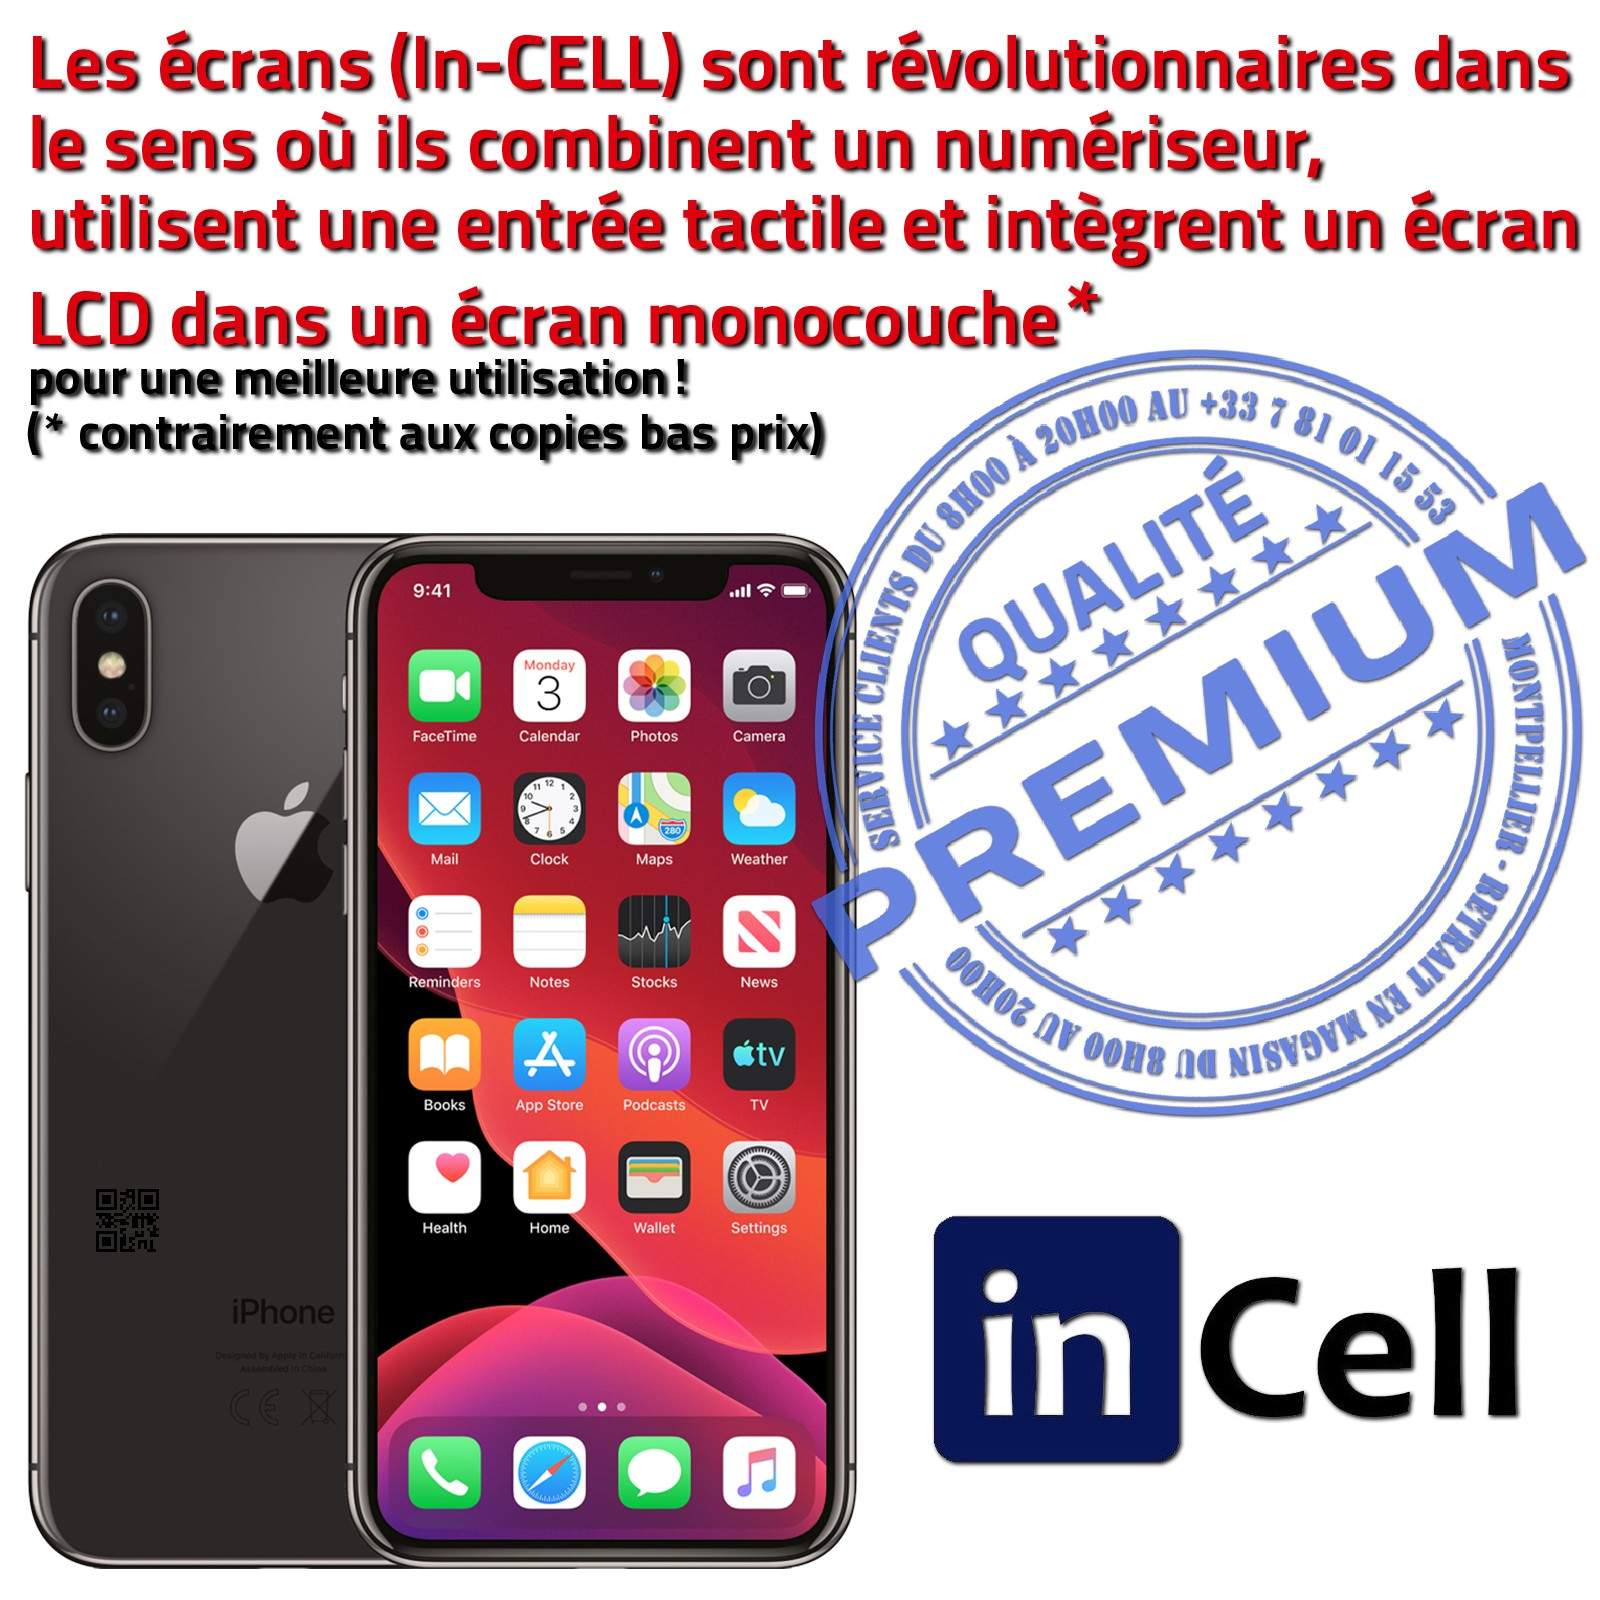 https://media3.24hshop.fr/19981-thickbox_default/ecran-complet-iphone-xr-a2105-incell-apple-premium-super-retina-61-in-vitre-smartphone-affichage-true-tone-cristaux-liquides.jpg